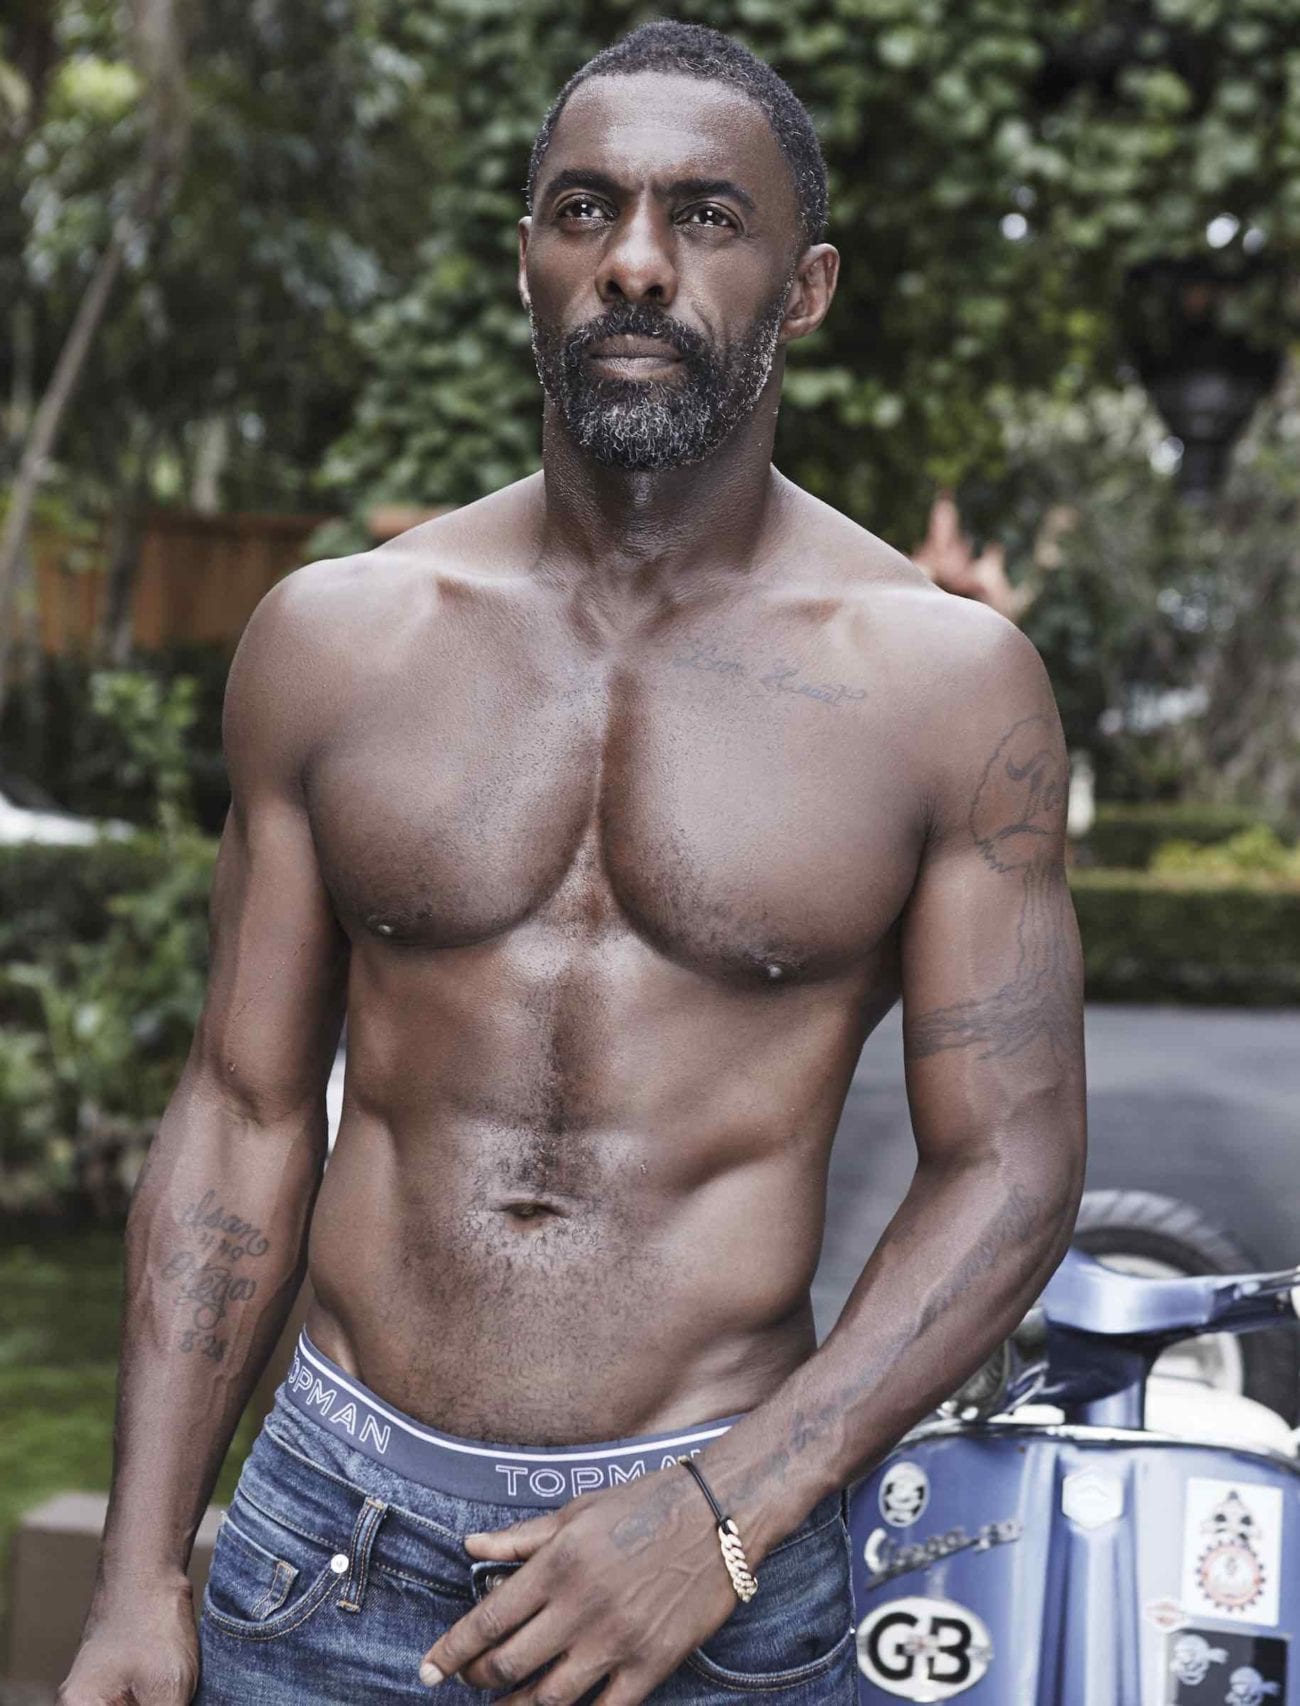 Idris Elba has Coronavirus: His best shirtless scenes for your